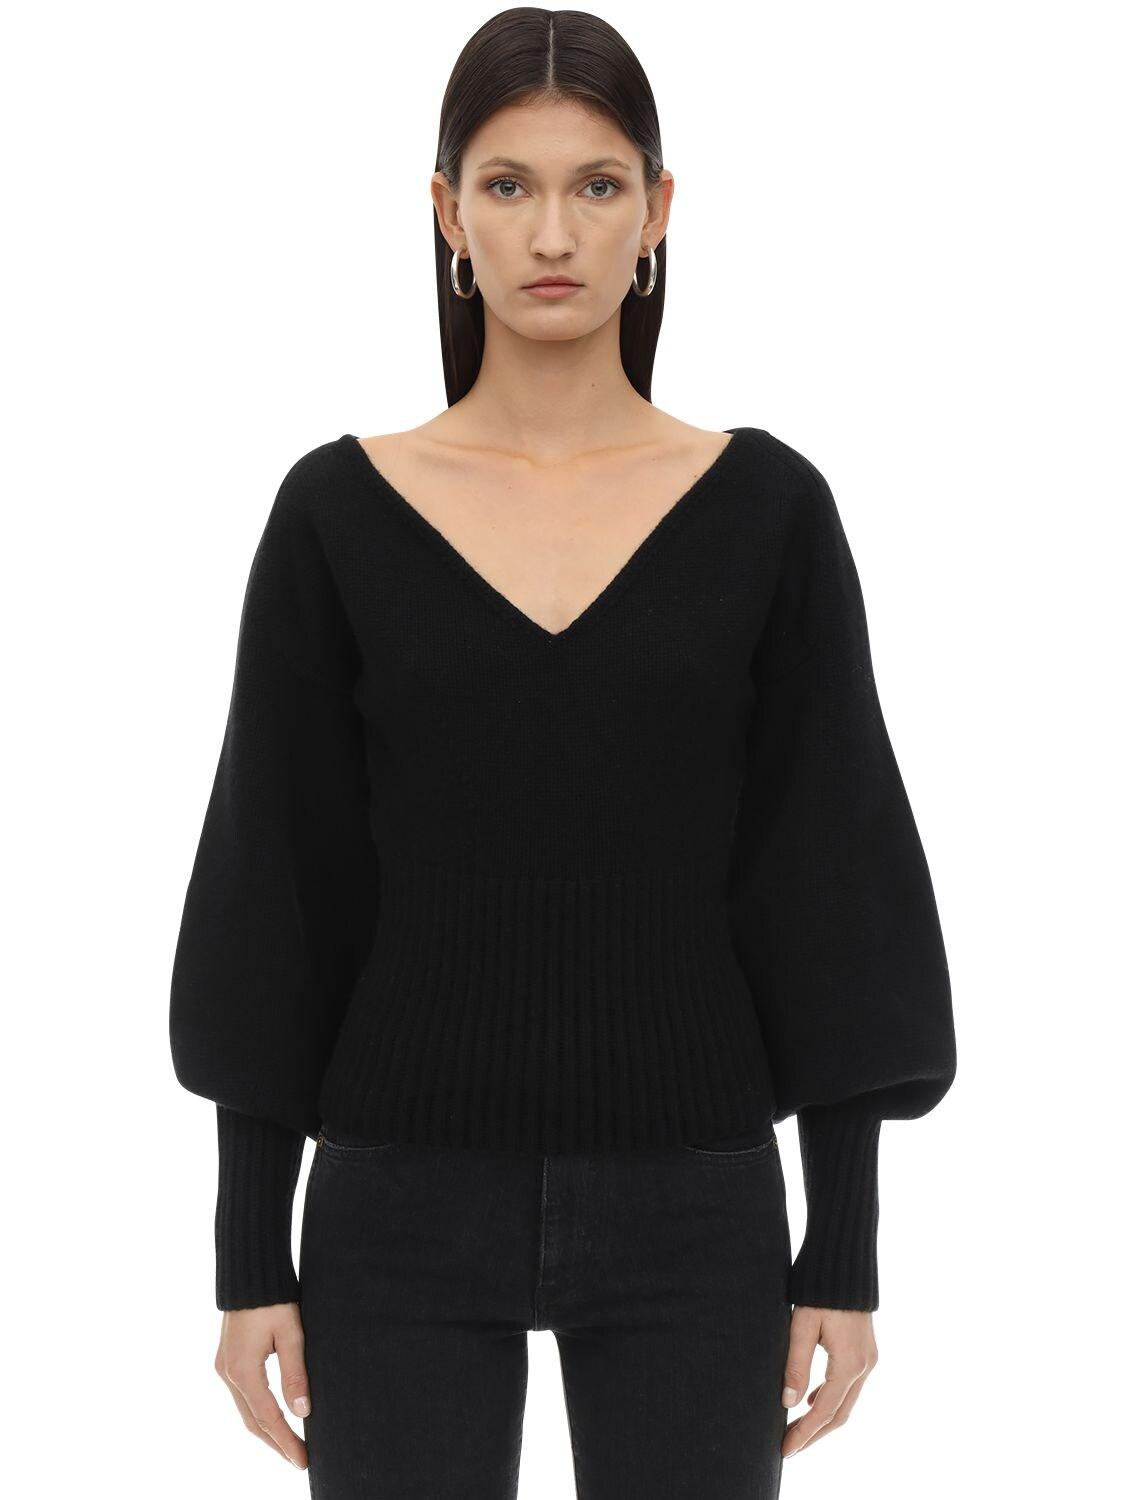 Khaite Charlette Cashmere Knit Sweater in Black - Lyst